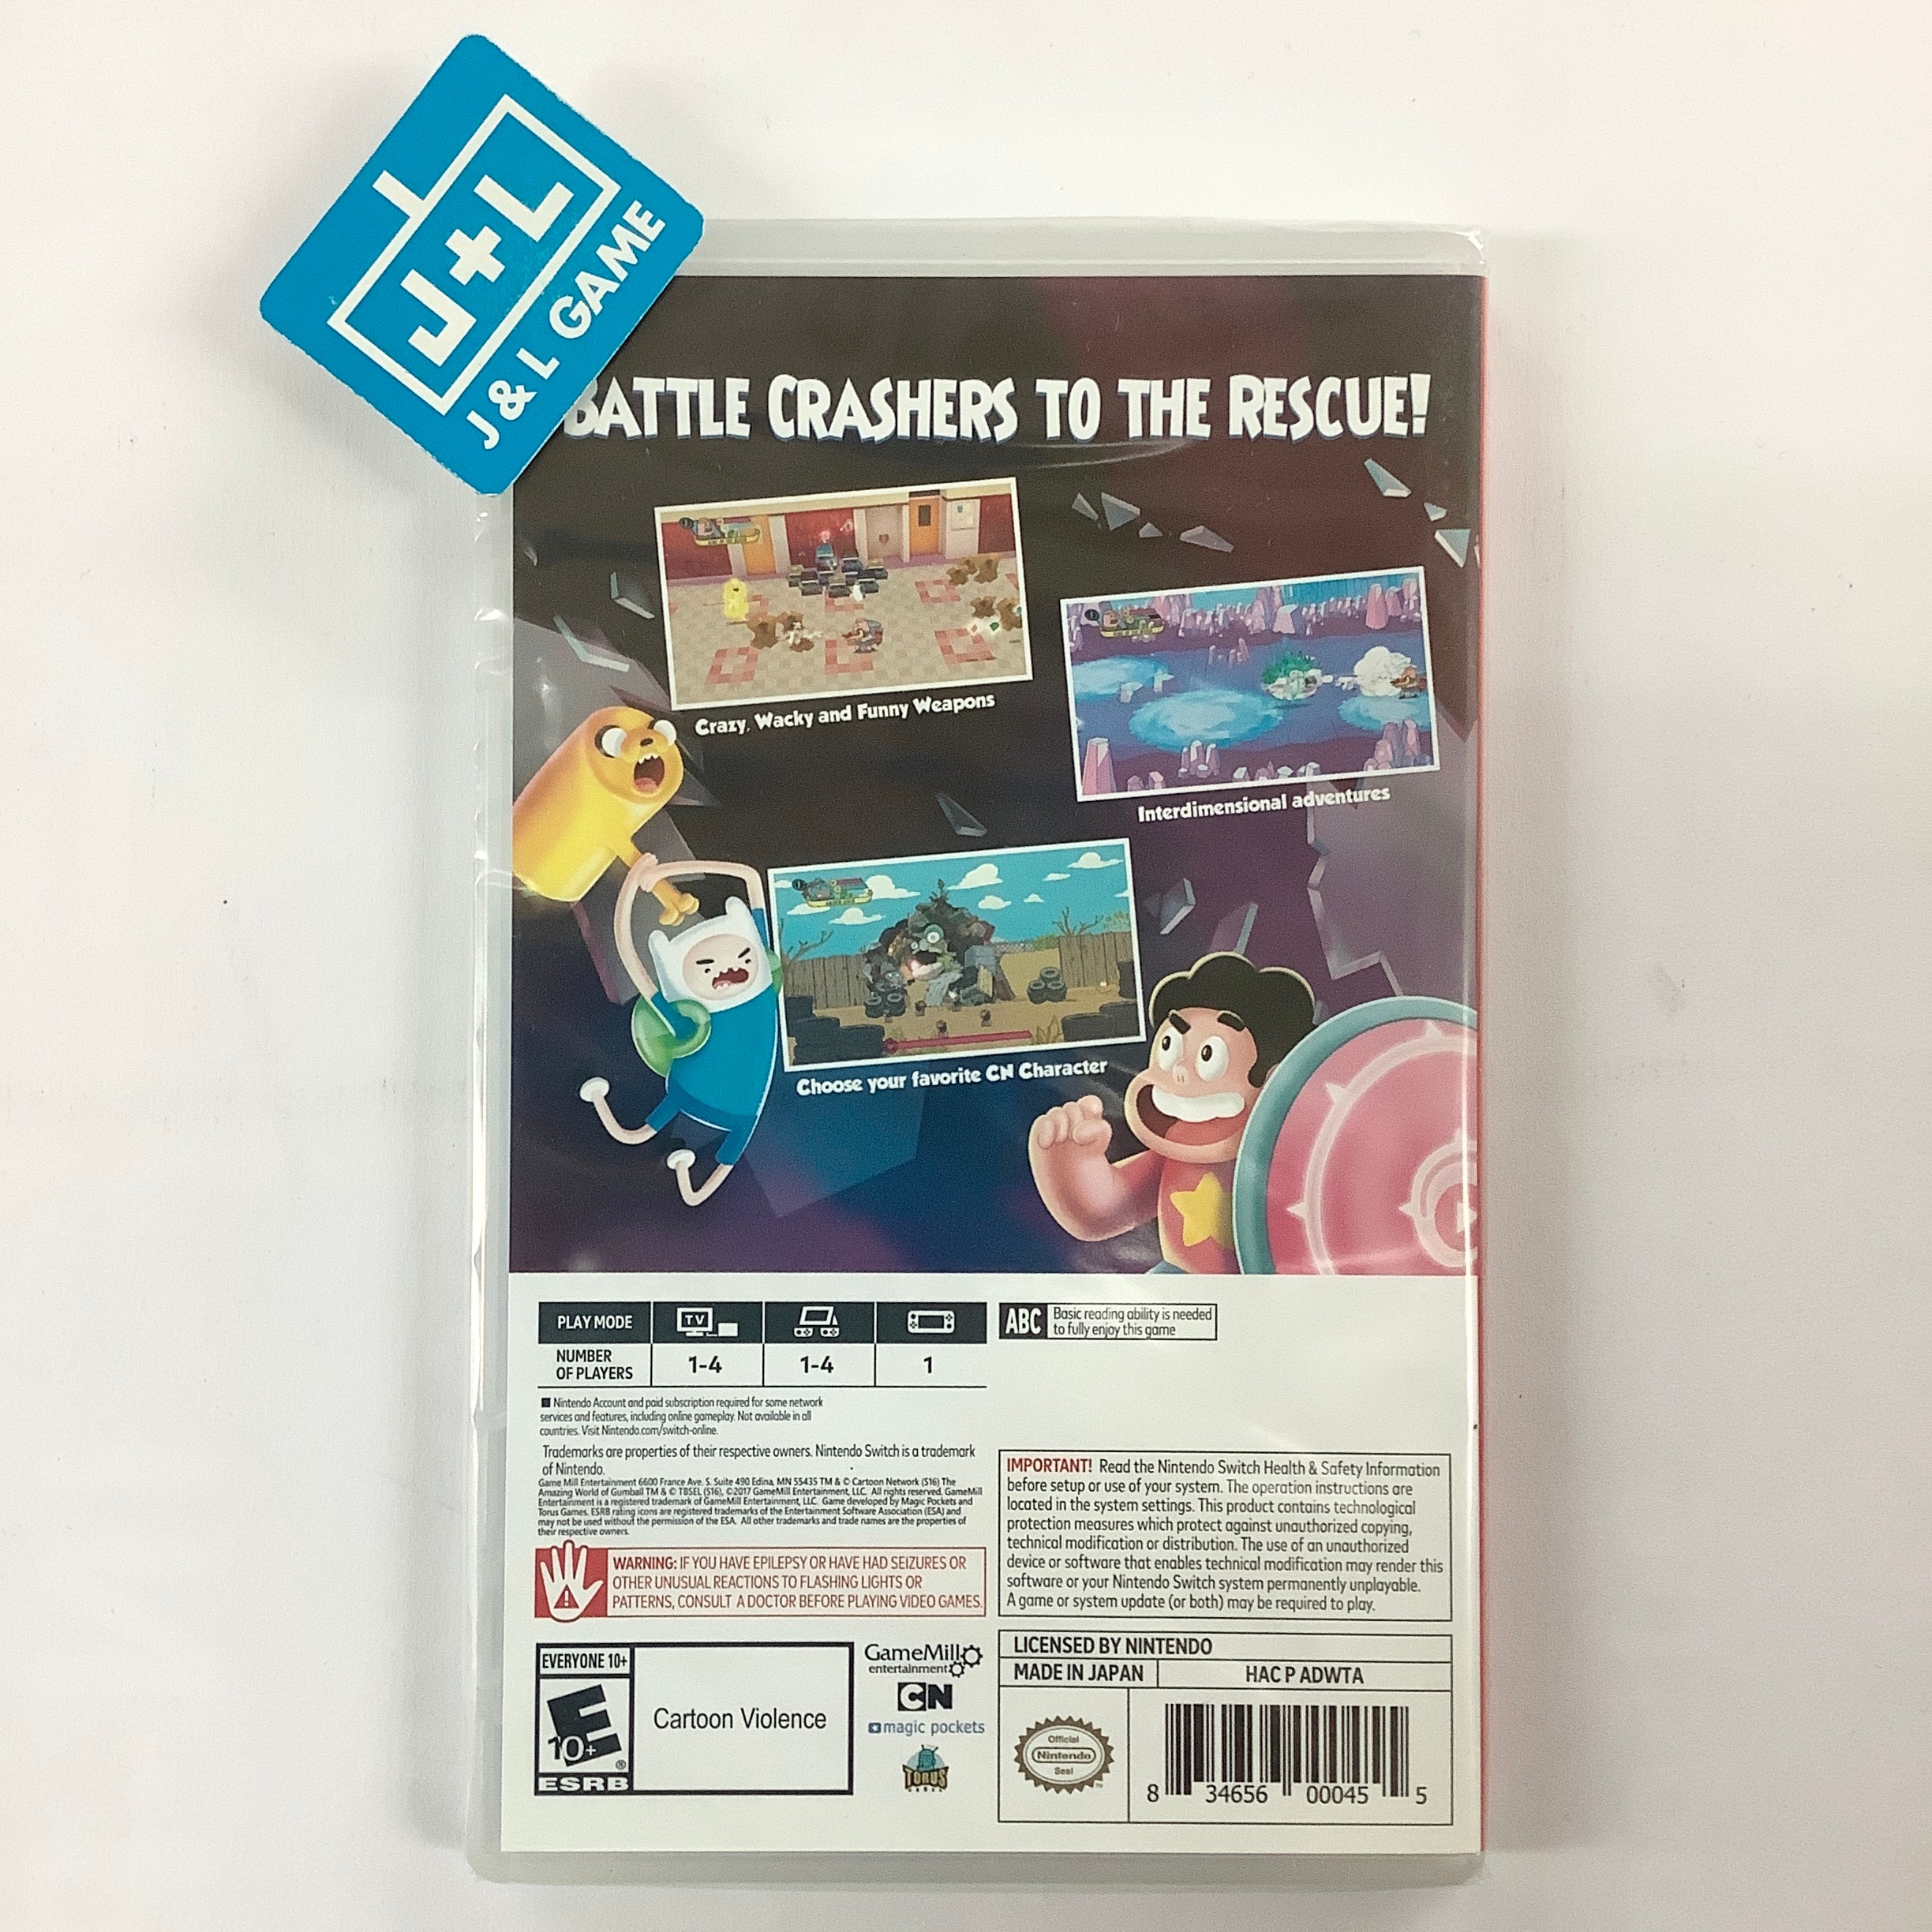 Cartoon Network Battle Crashers - (NSW) Nintendo Switch Video Games GameMill Entertainment   